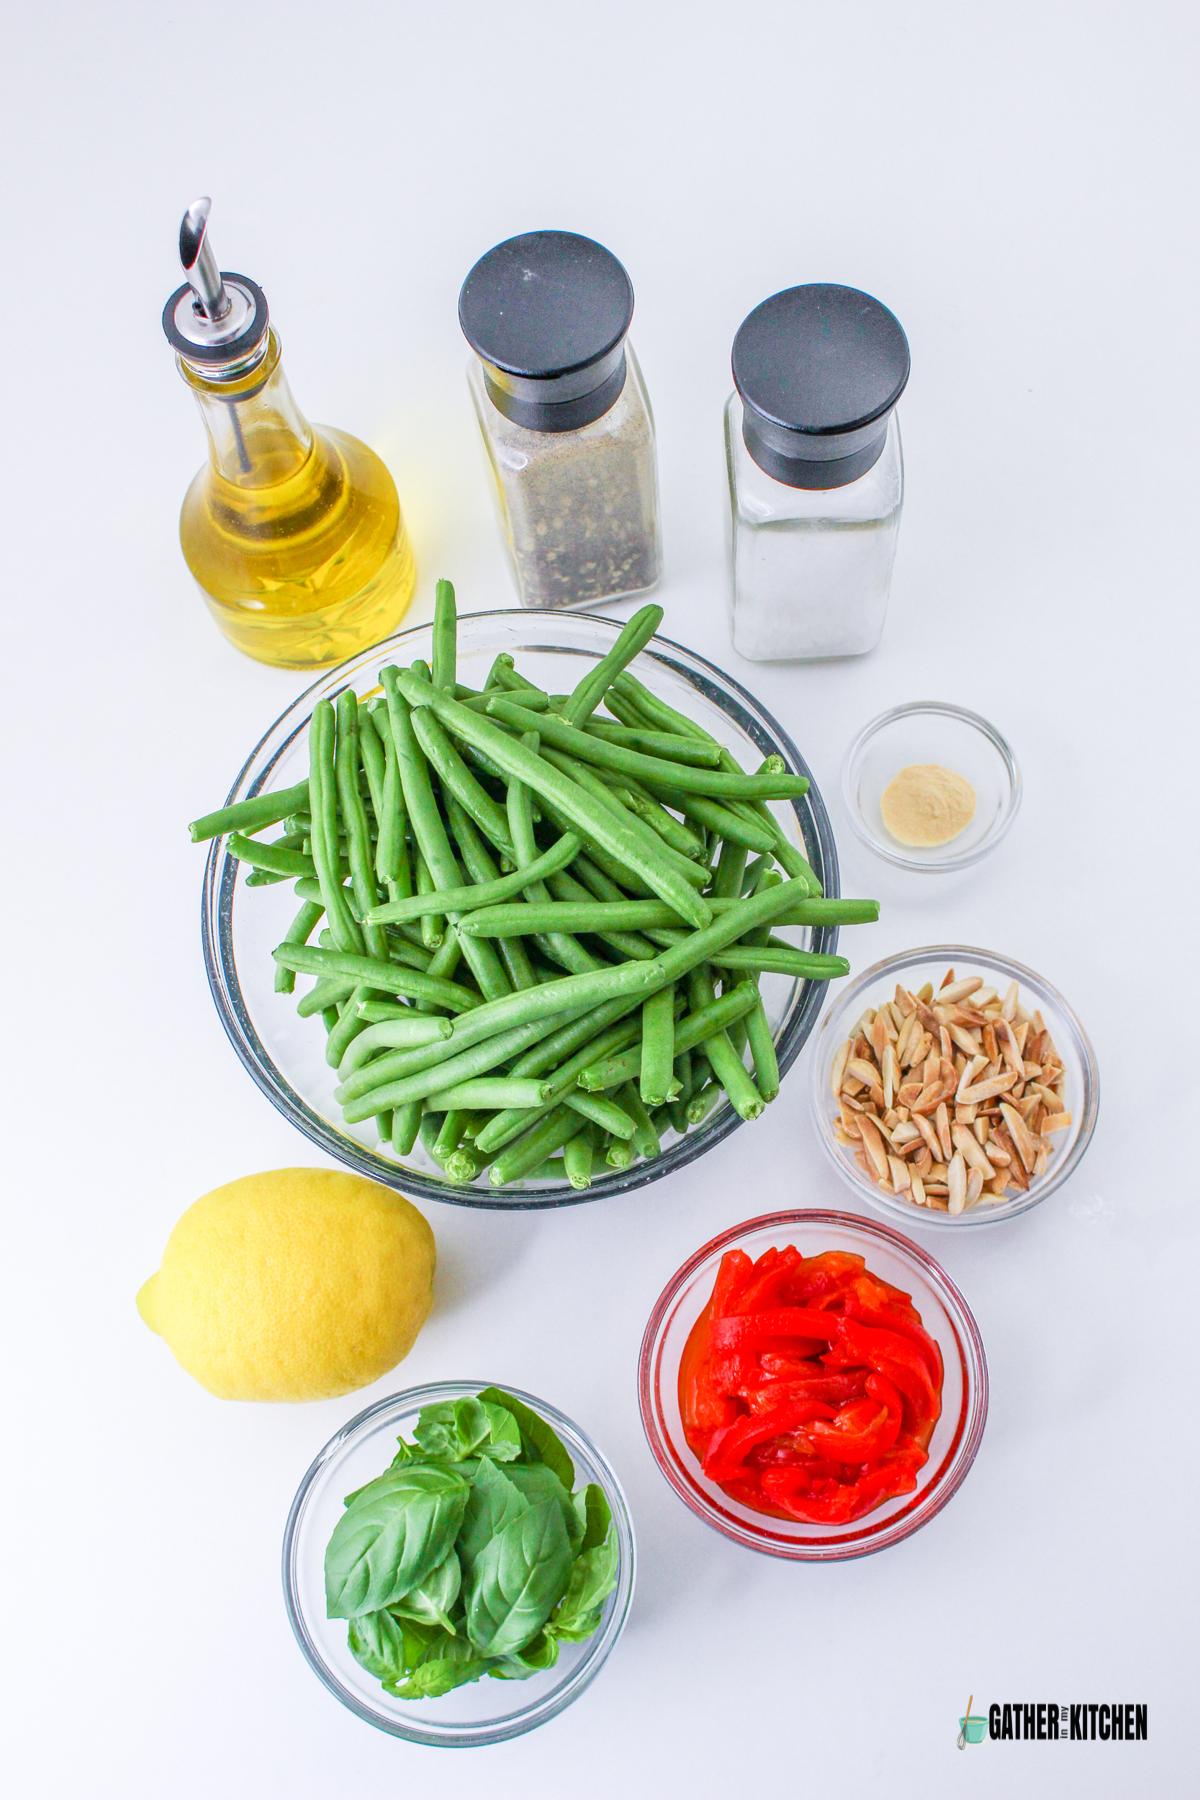 Ingredients: olive oil, pepper, salt, green beans, garlic powder, slivered almonds, bell peppers, fresh basil leaves, and a lemon.